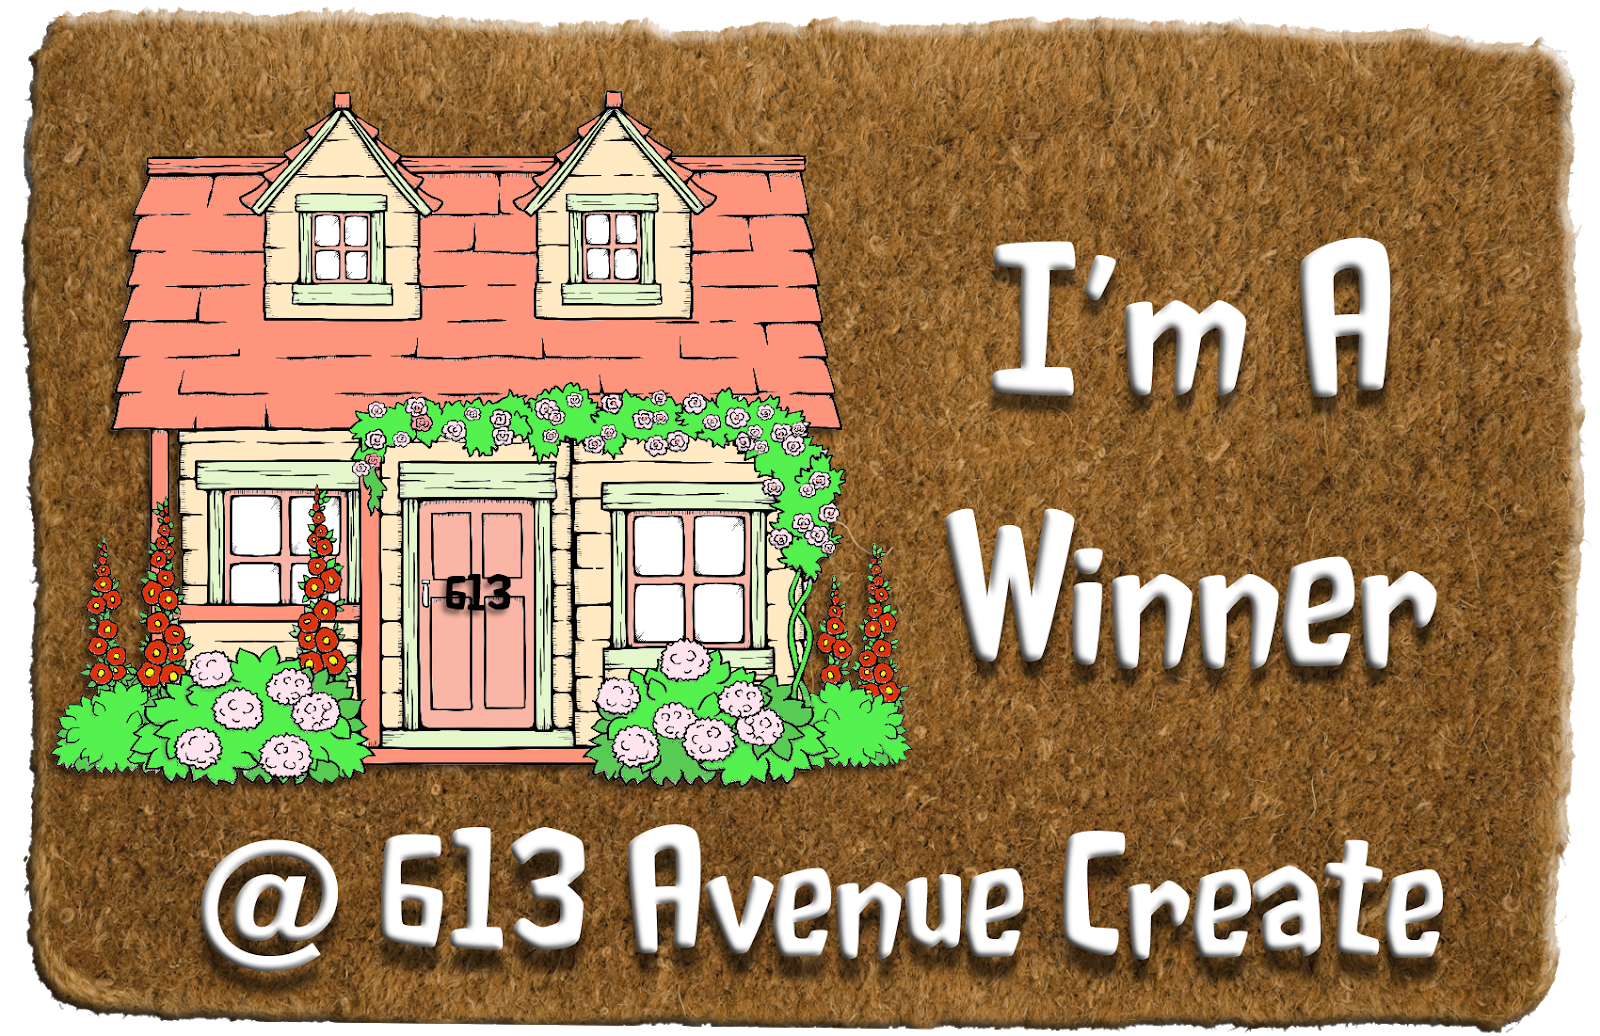 613 Avenue Create Winner